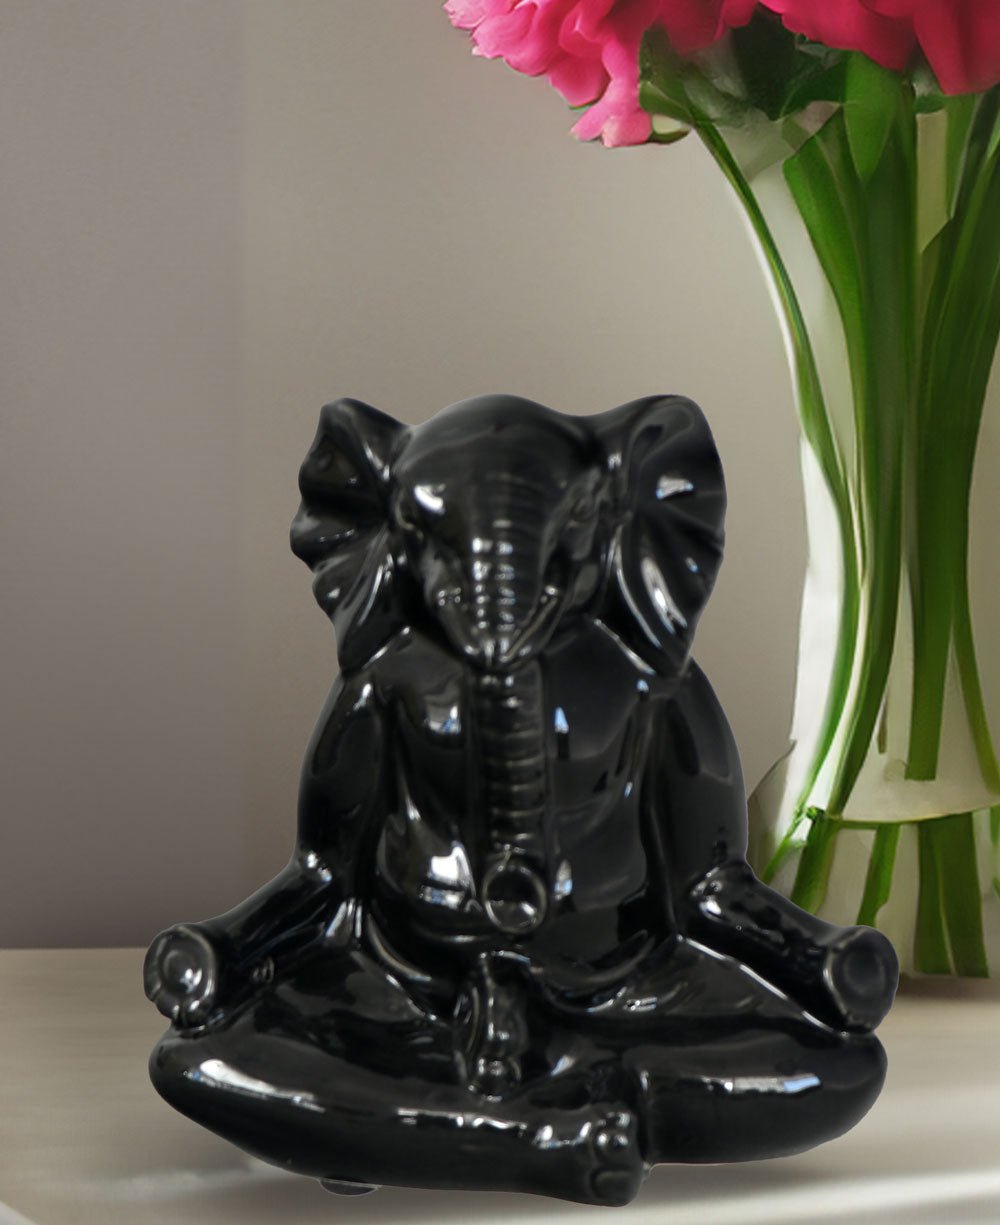 Sleek Black Ceramic Yoga Elephant Figurine - Sculptures & Statues